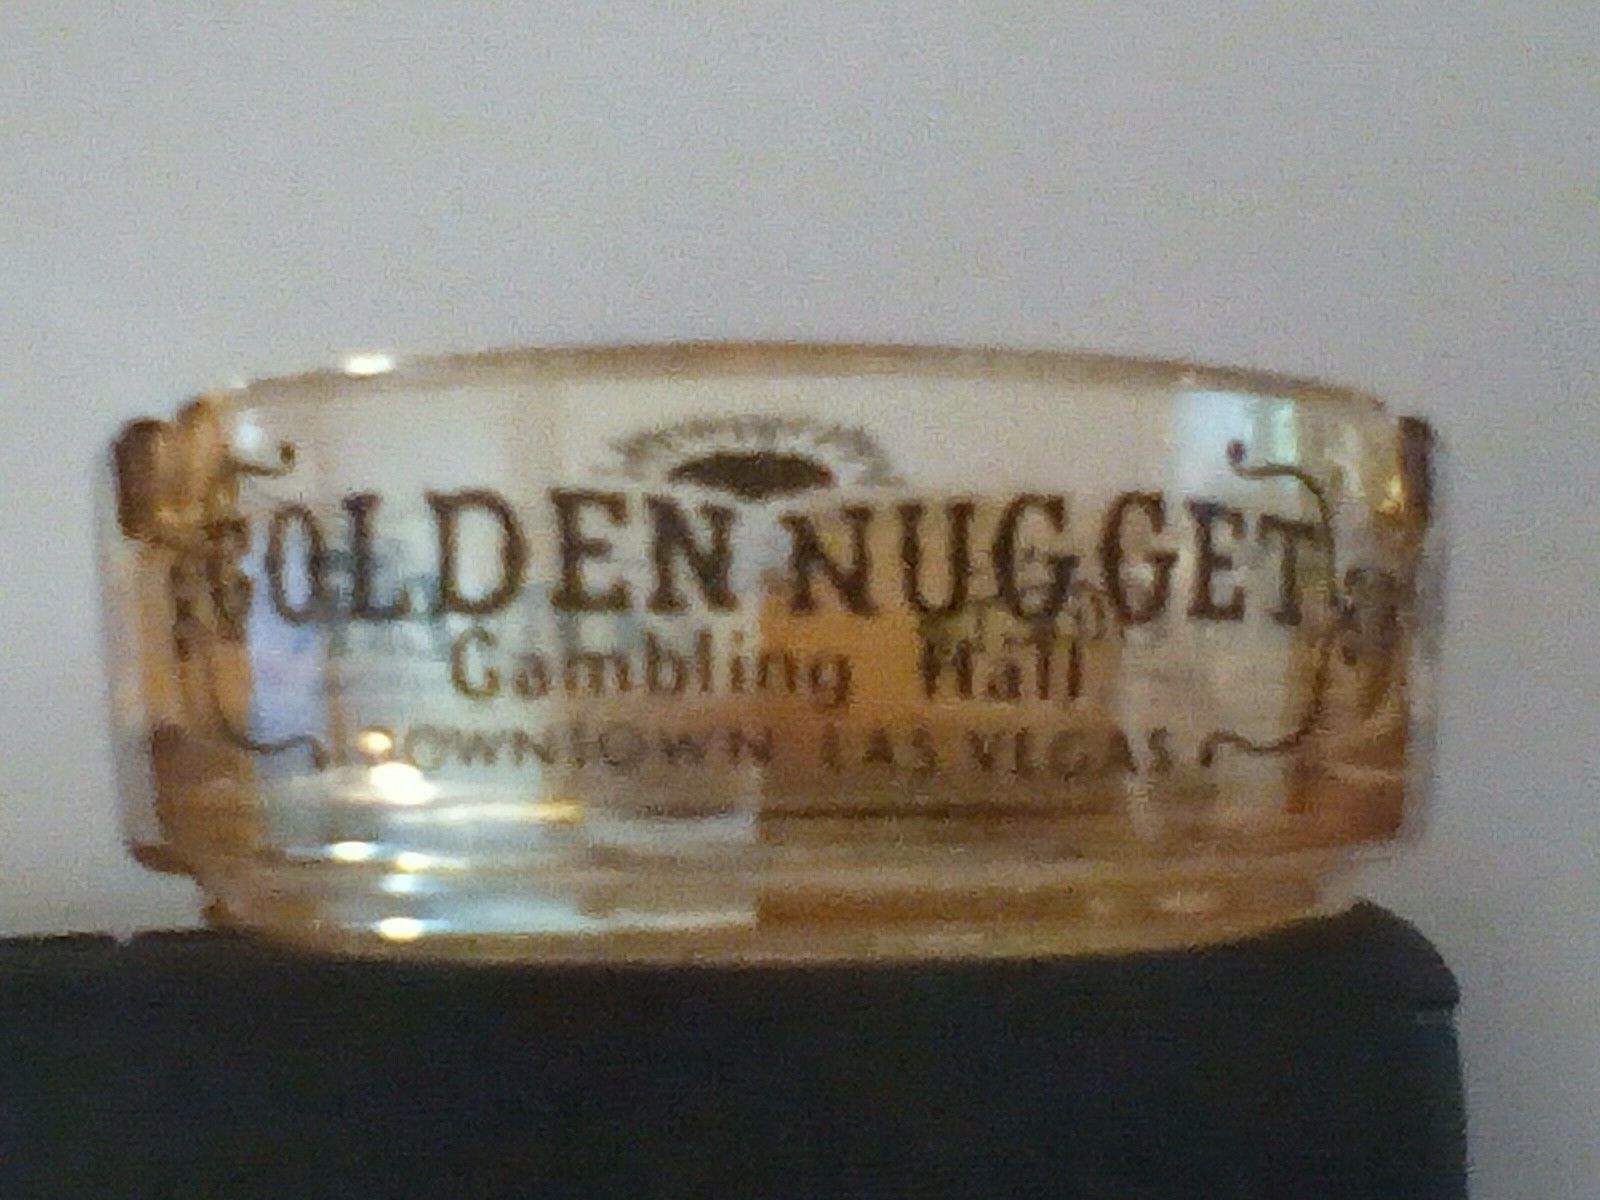 Las Vegas Nv Golden Nugget Gambling Hall Amber Class Ashtray New